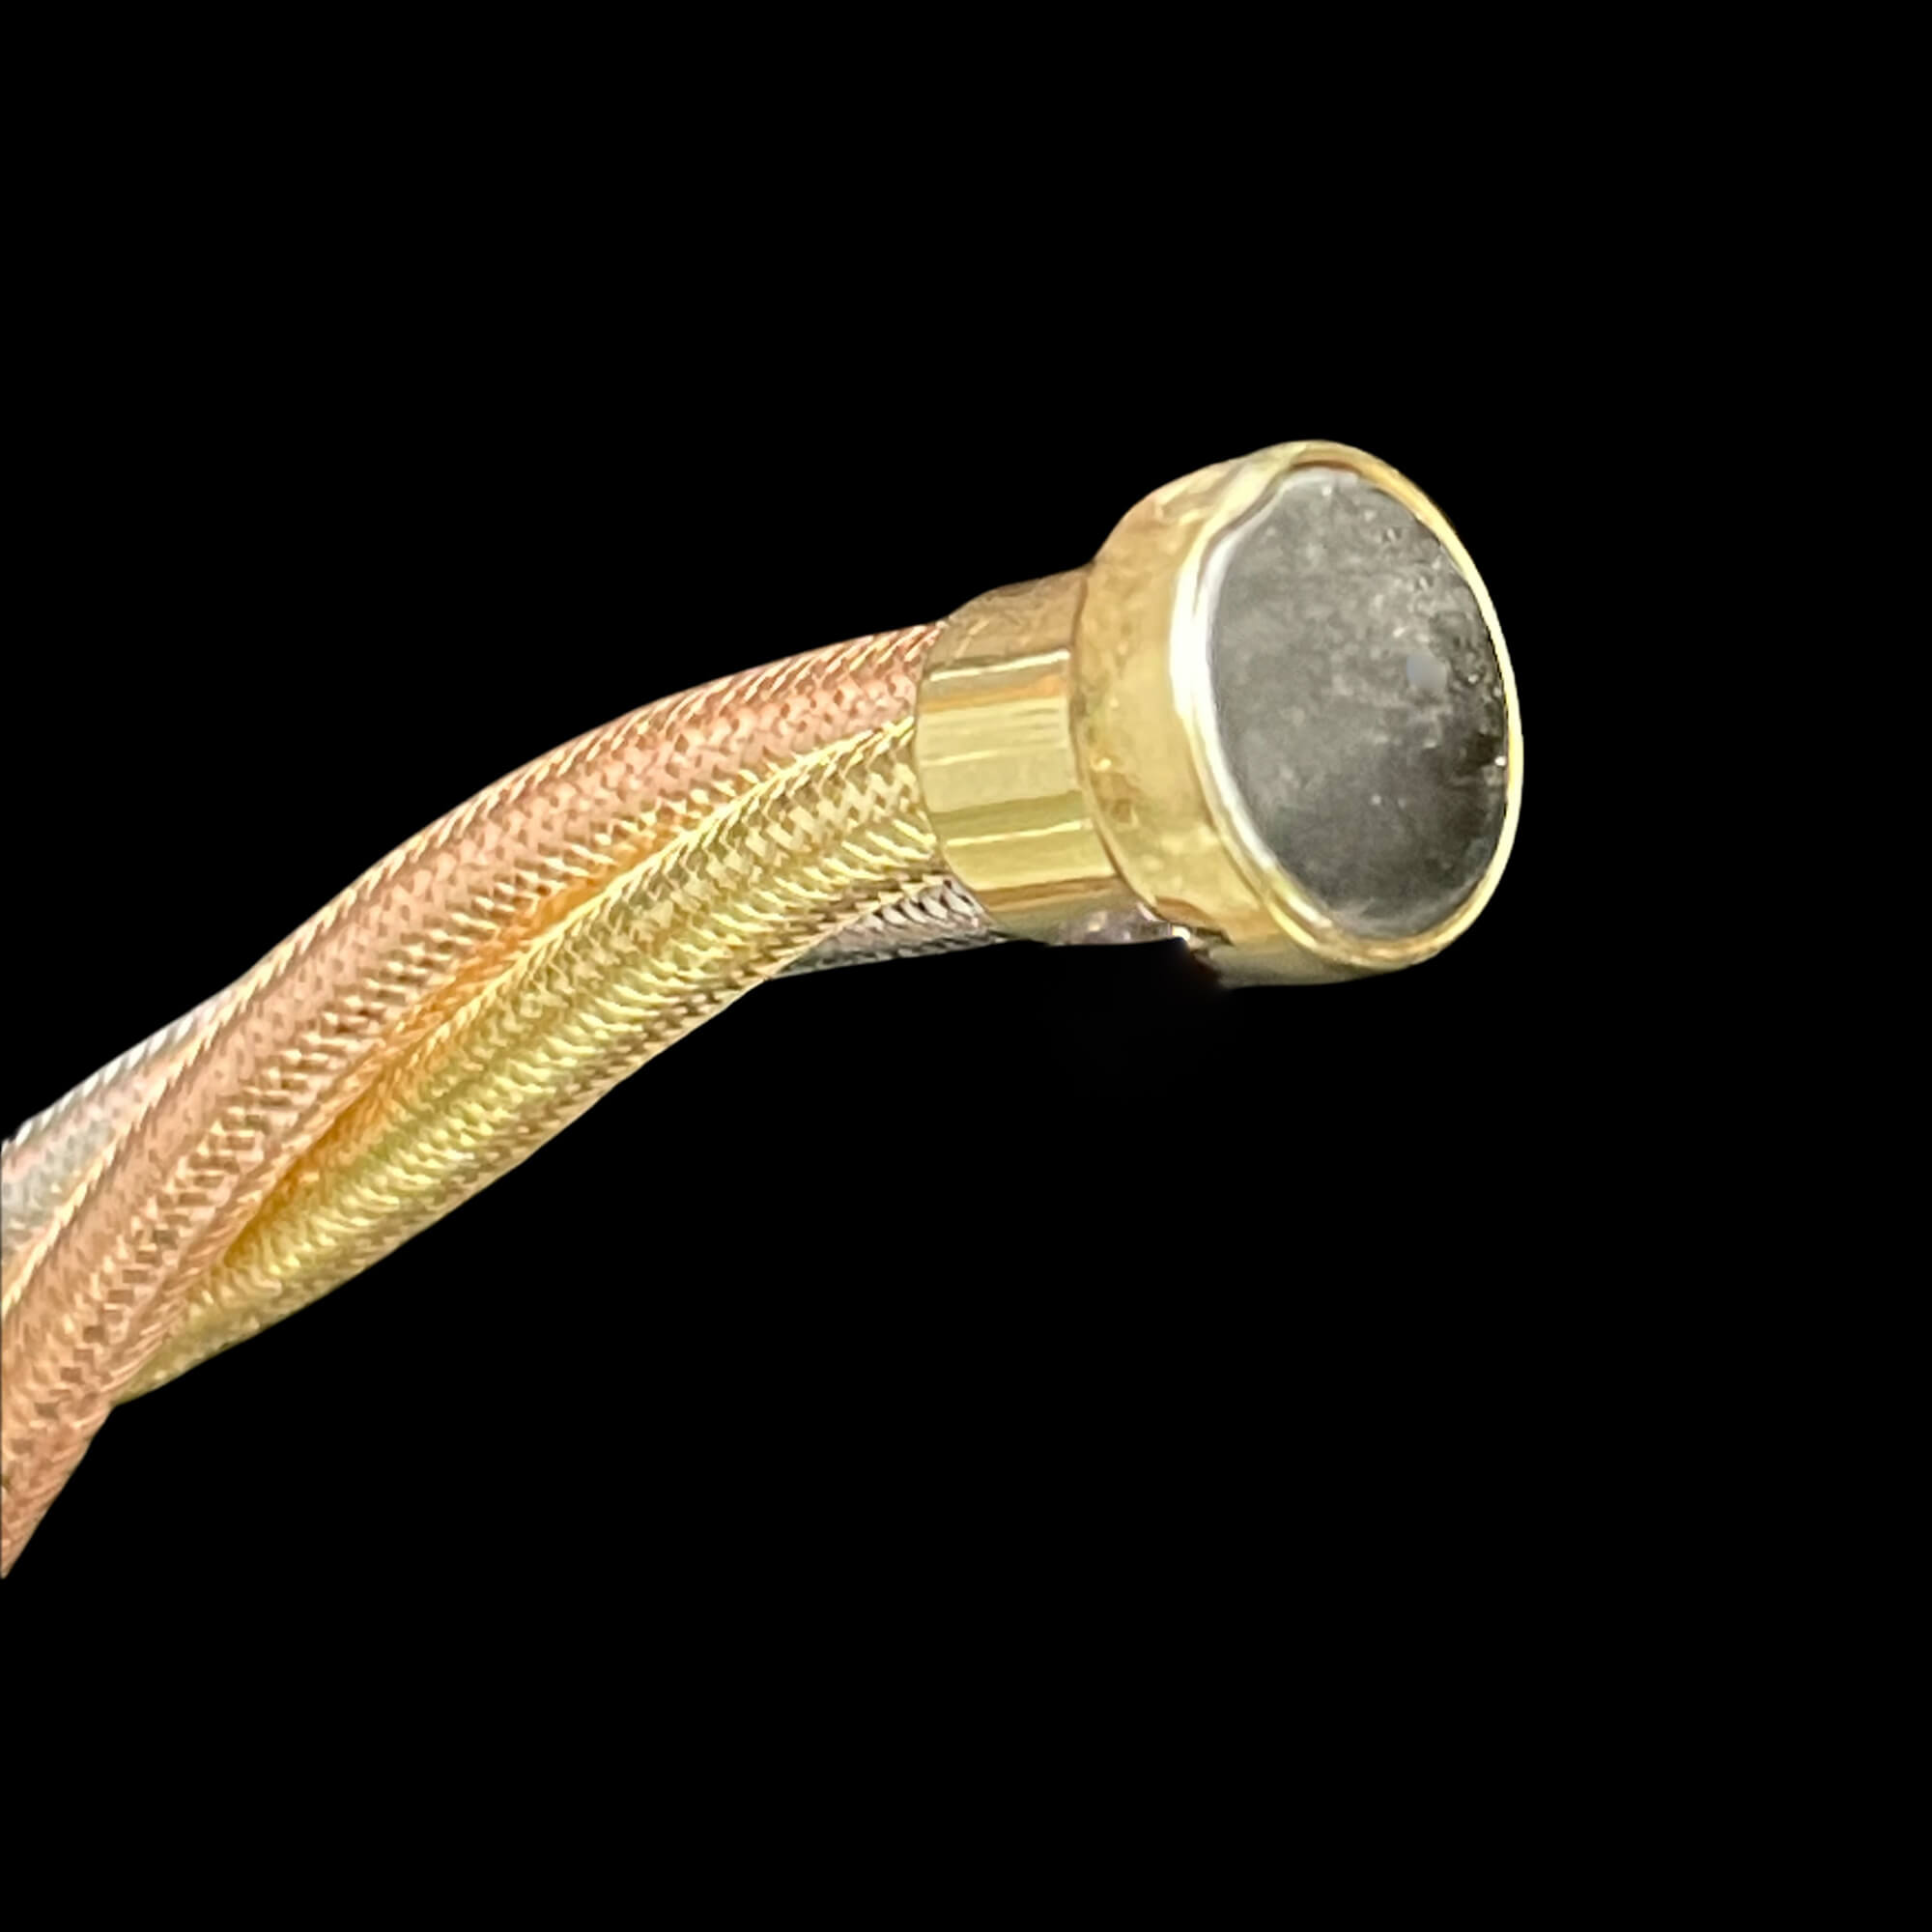 Gedrehtes Omega-Armband aus 18-karätigem 3-Farben-Gold und Silikon